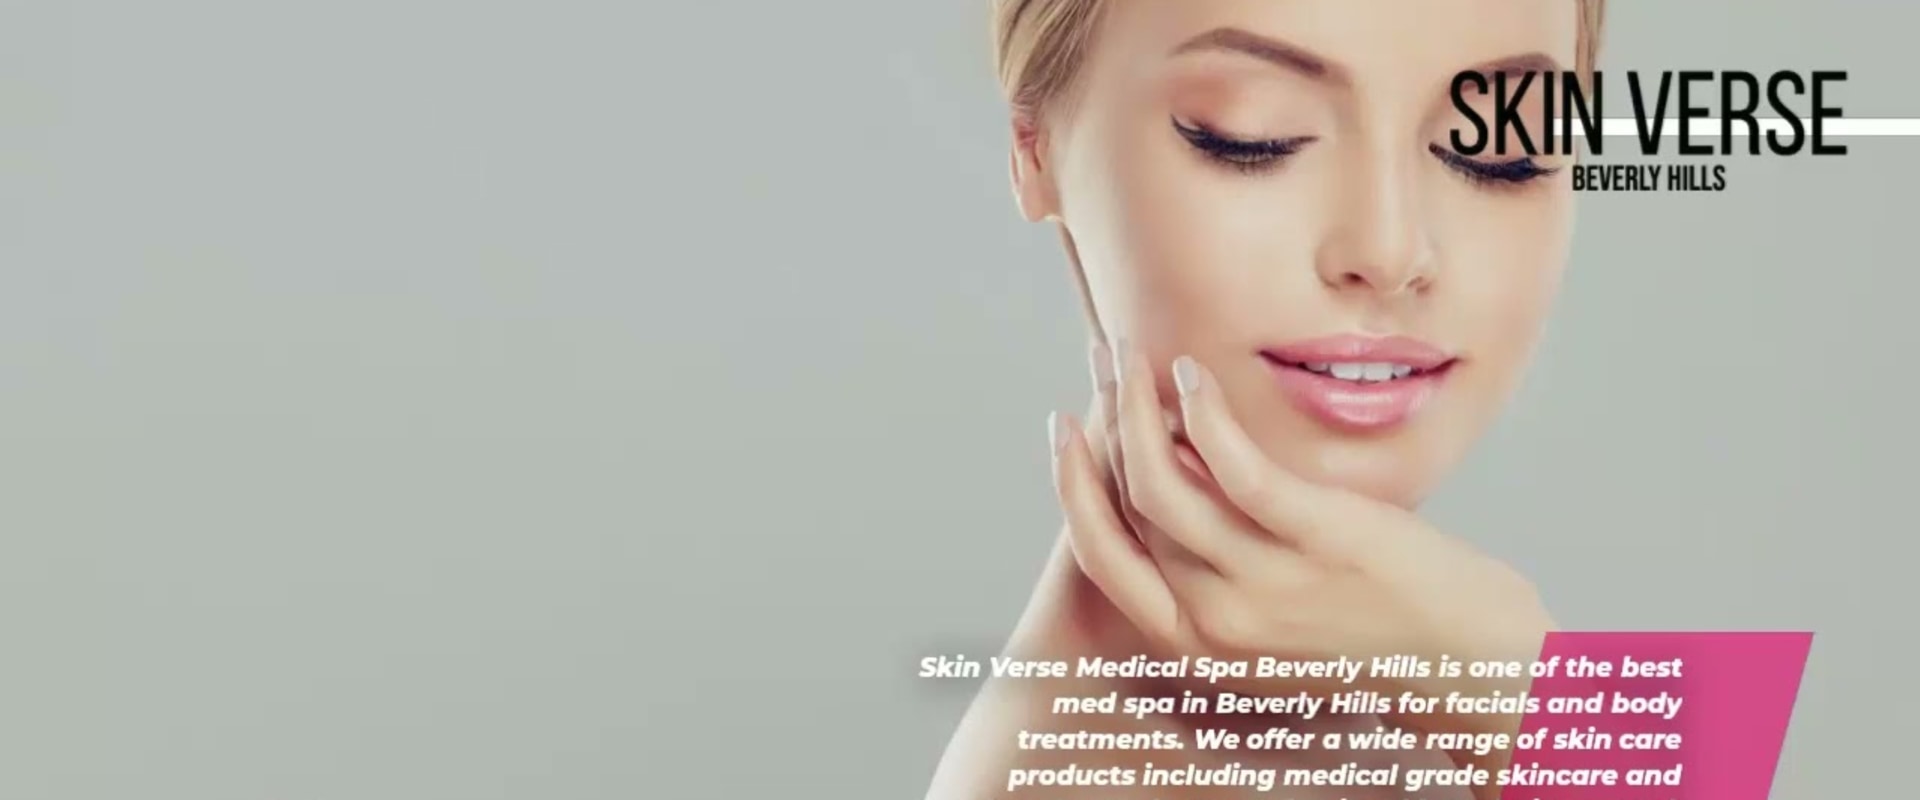 Skin Verse Medical spa Beverly Hills